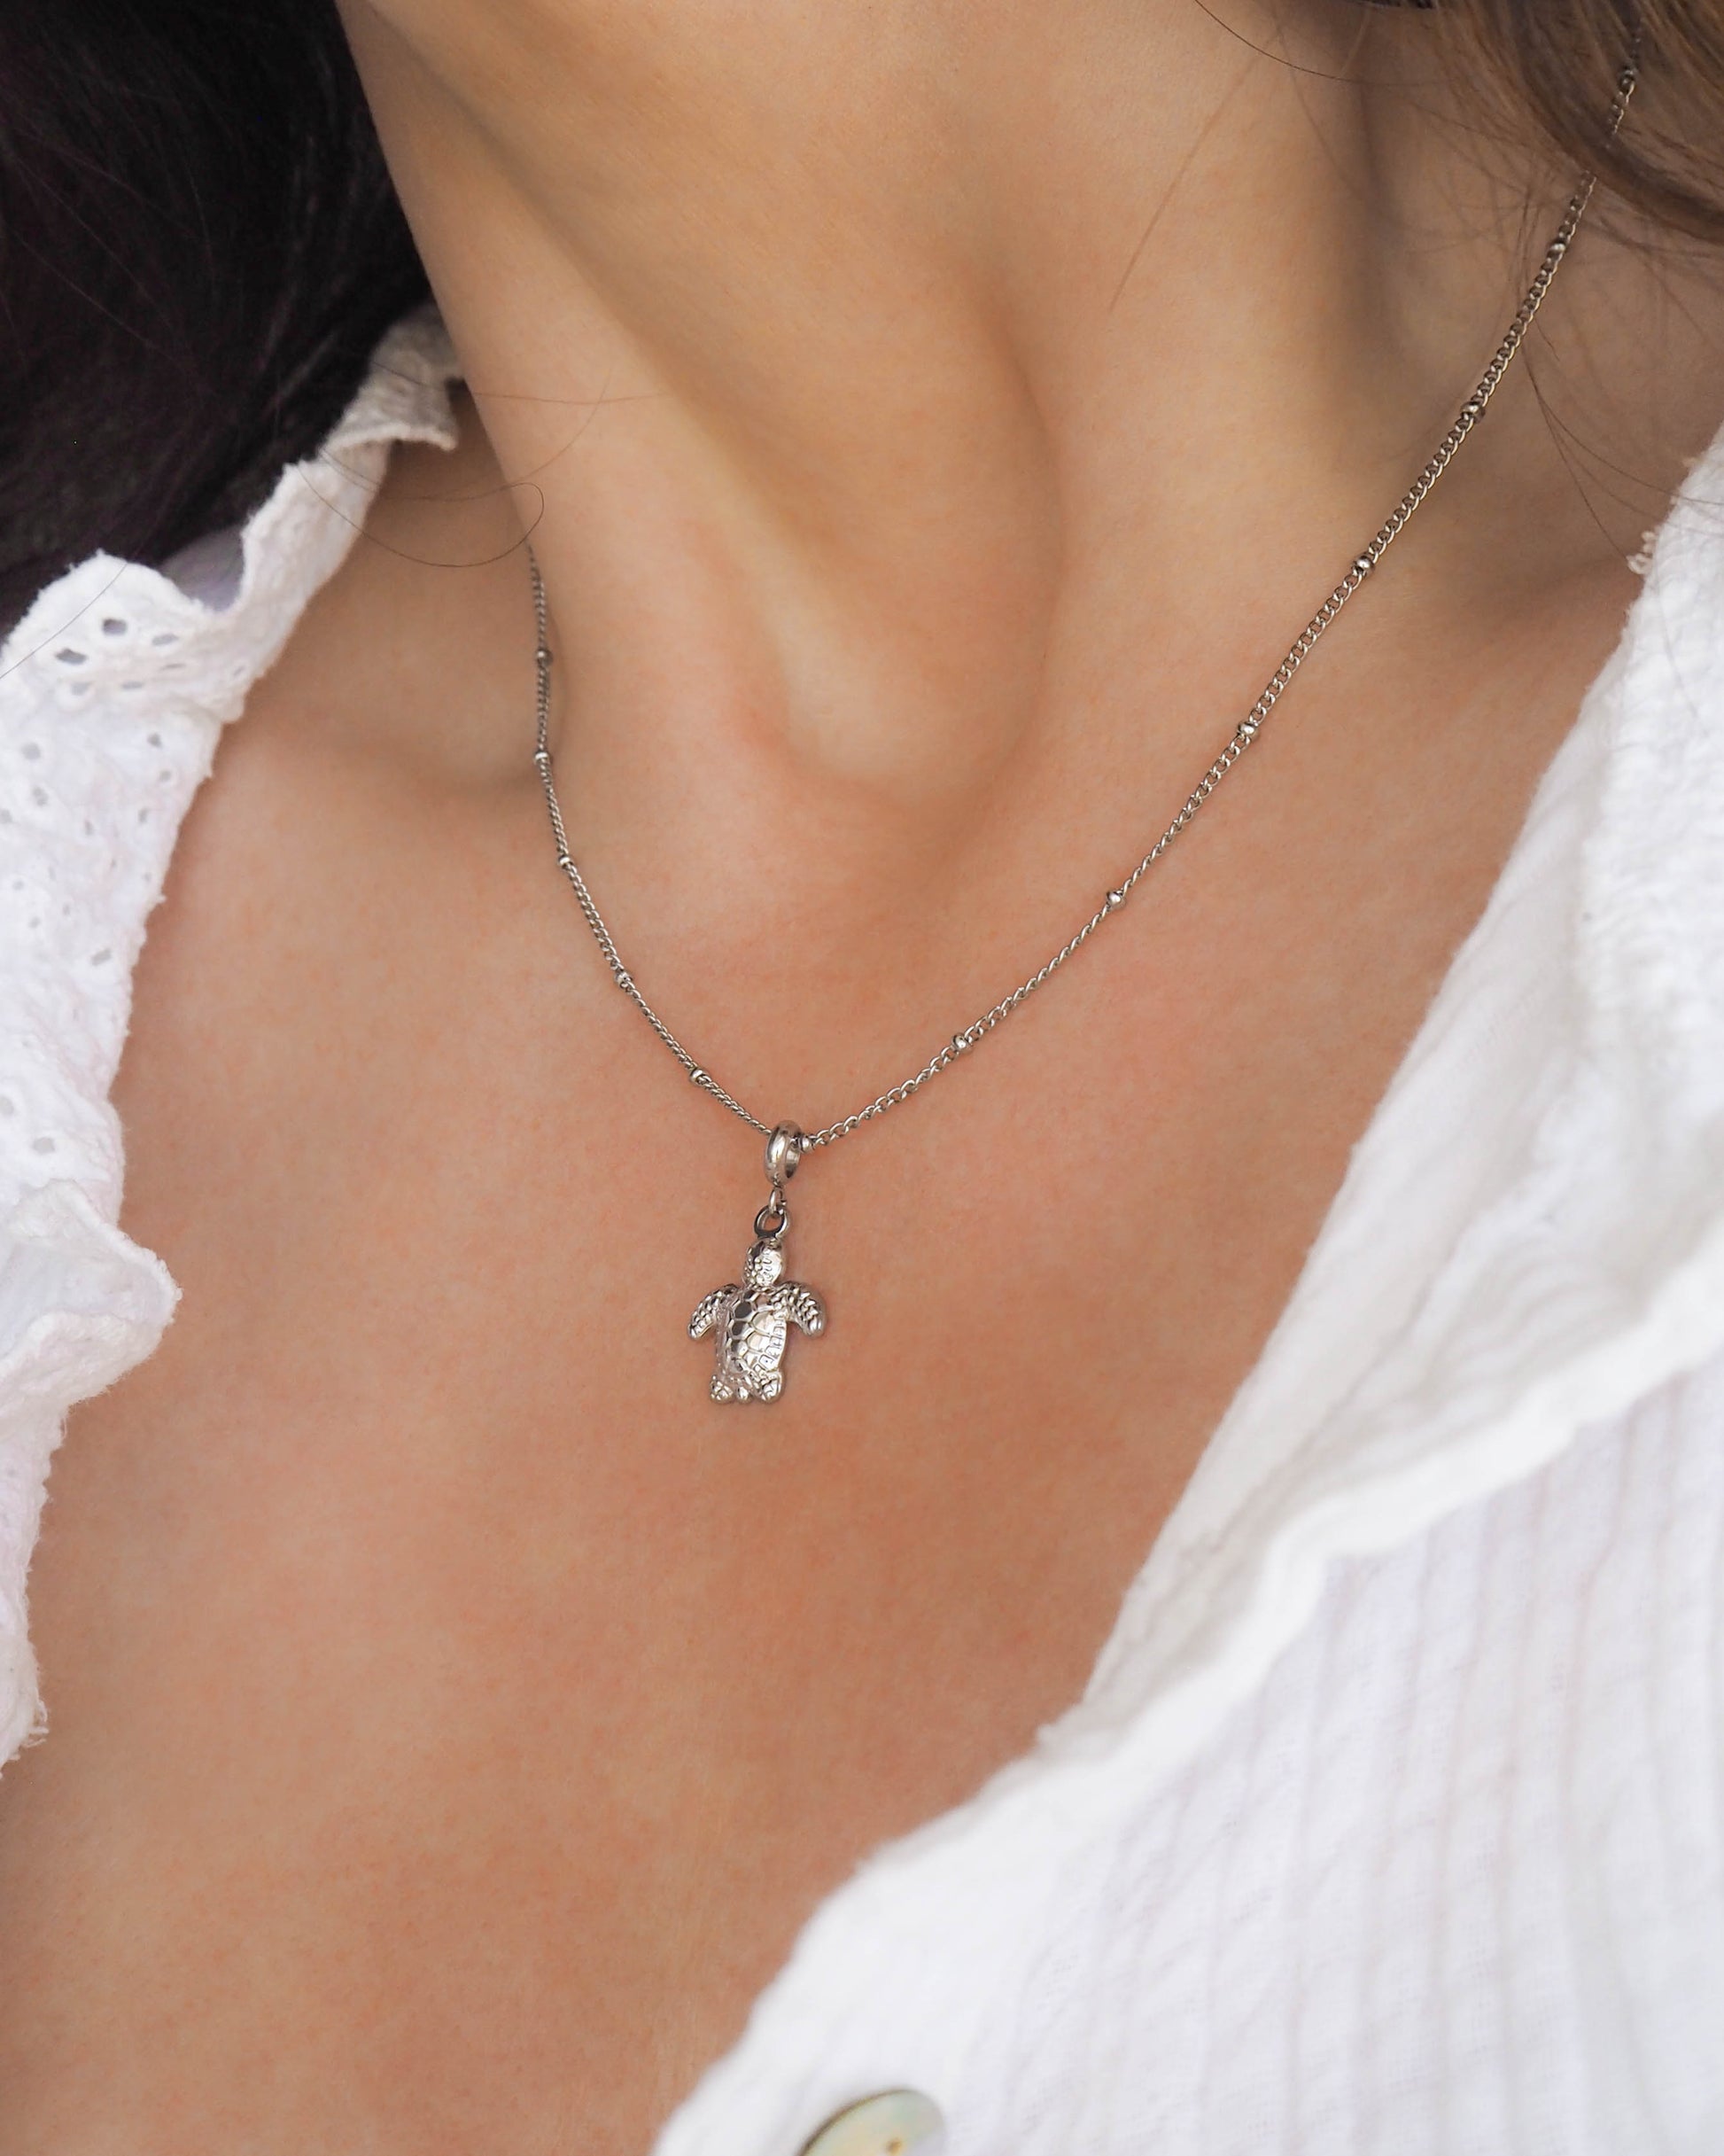 Model wearing Silver Turtle Necklace